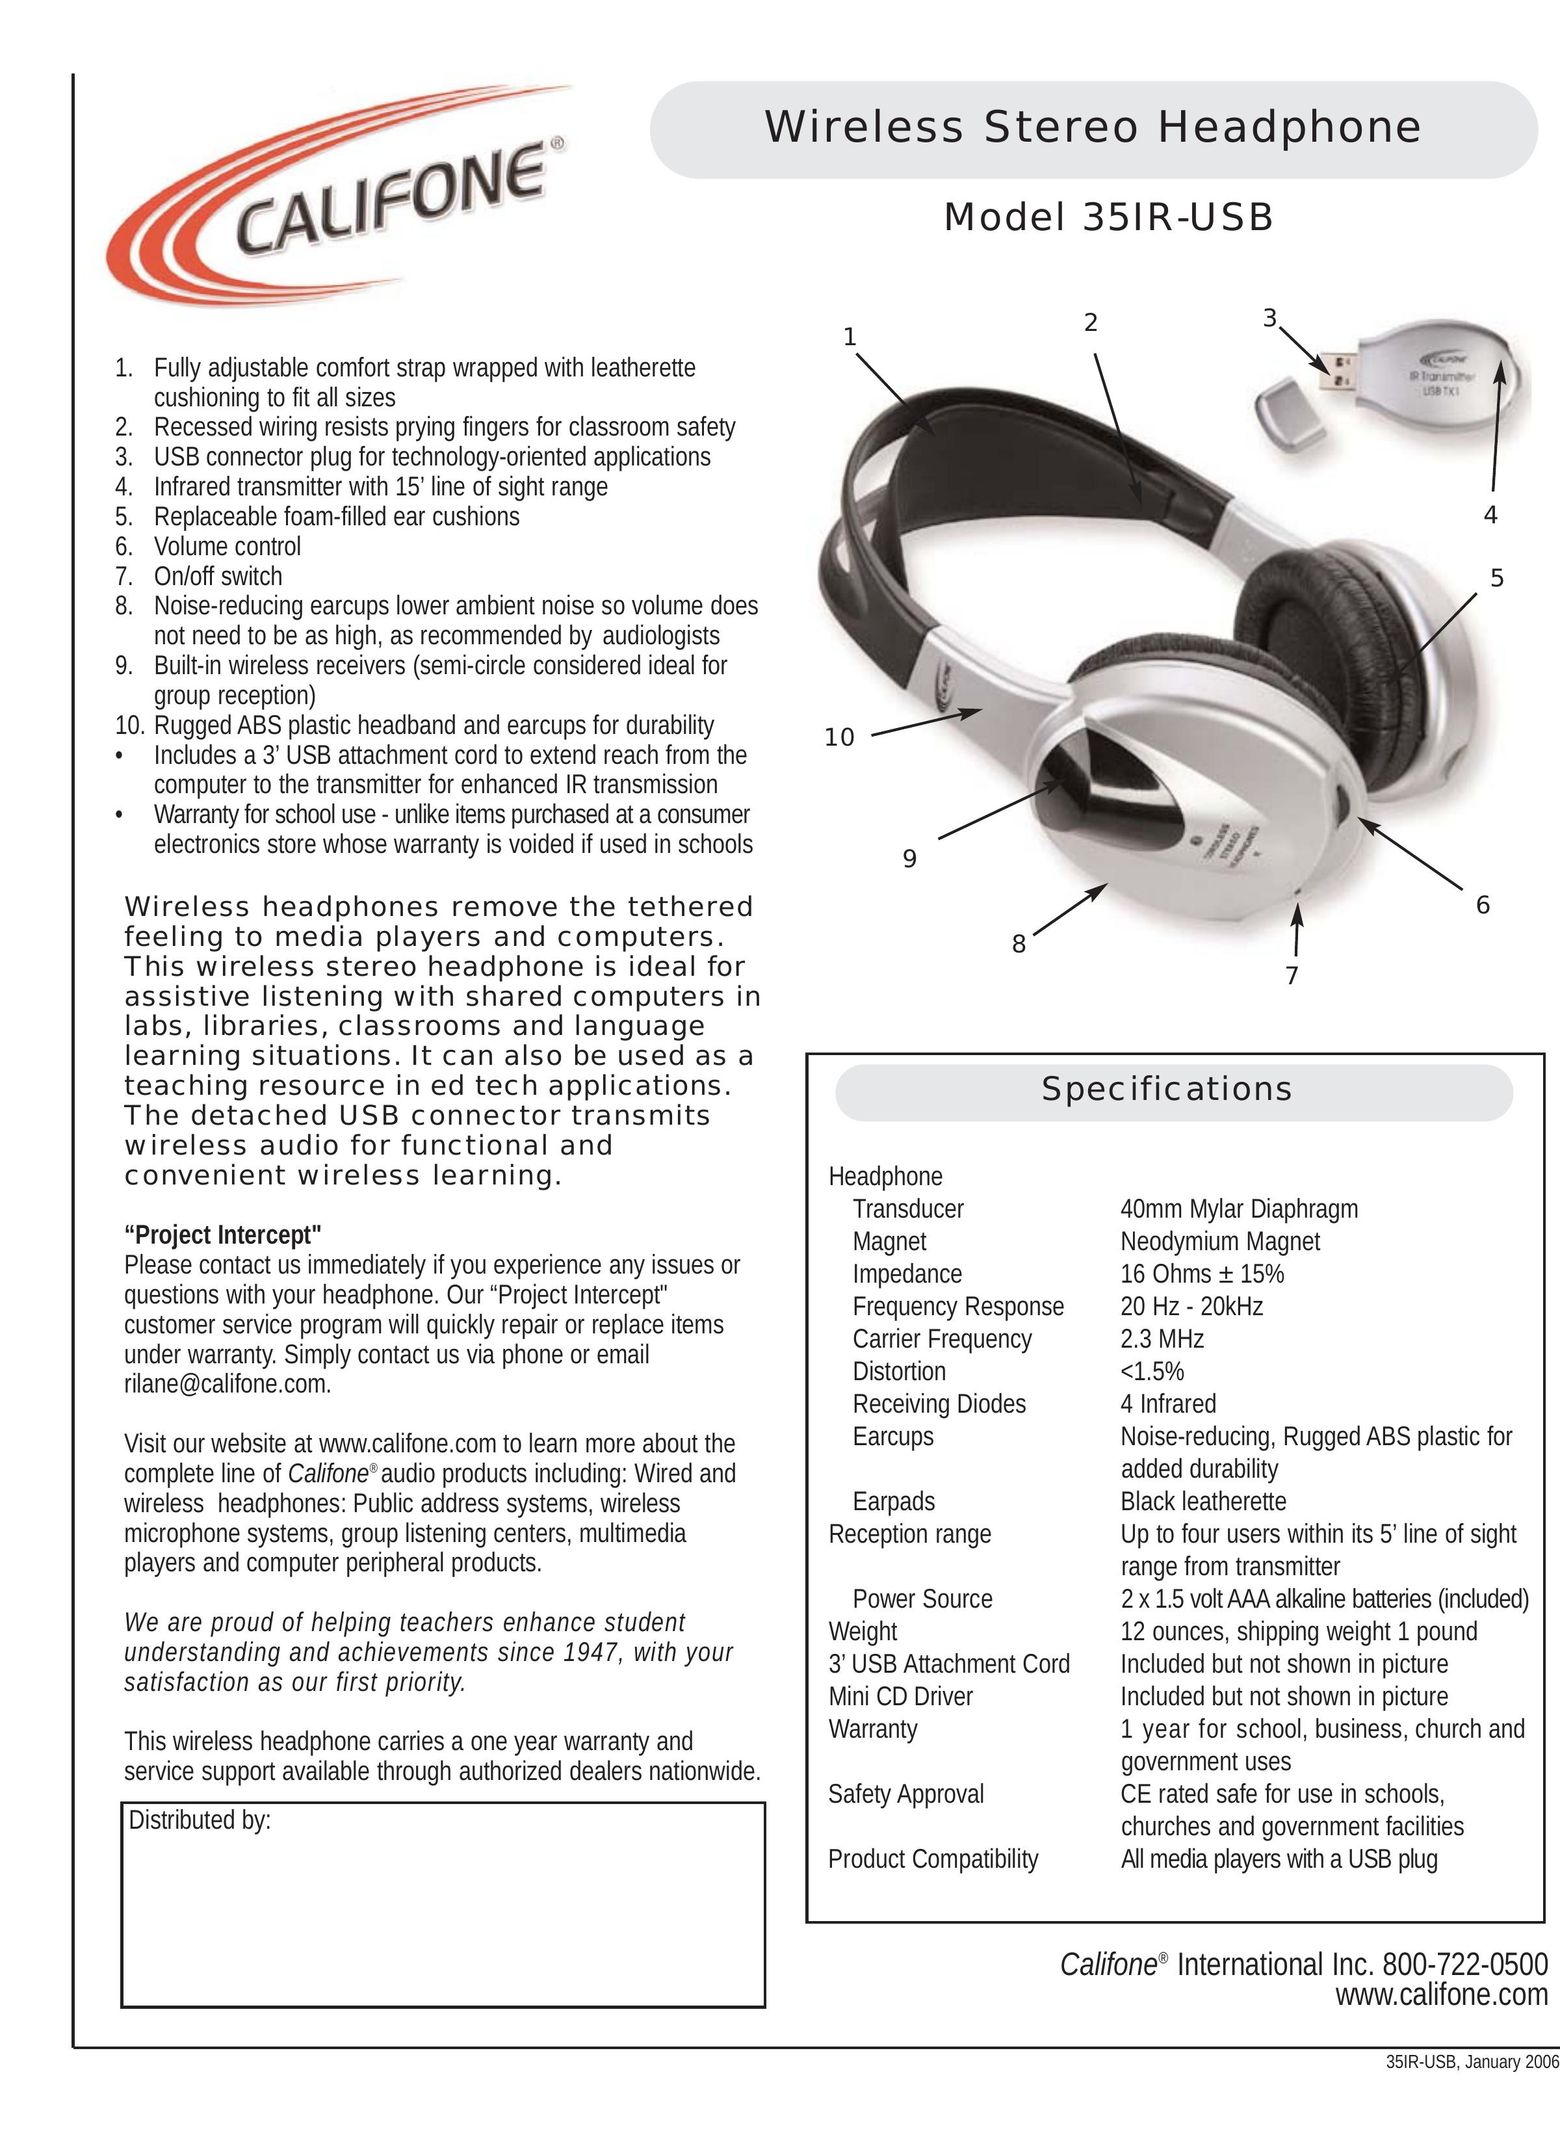 Califone 35IR Corded Headset User Manual